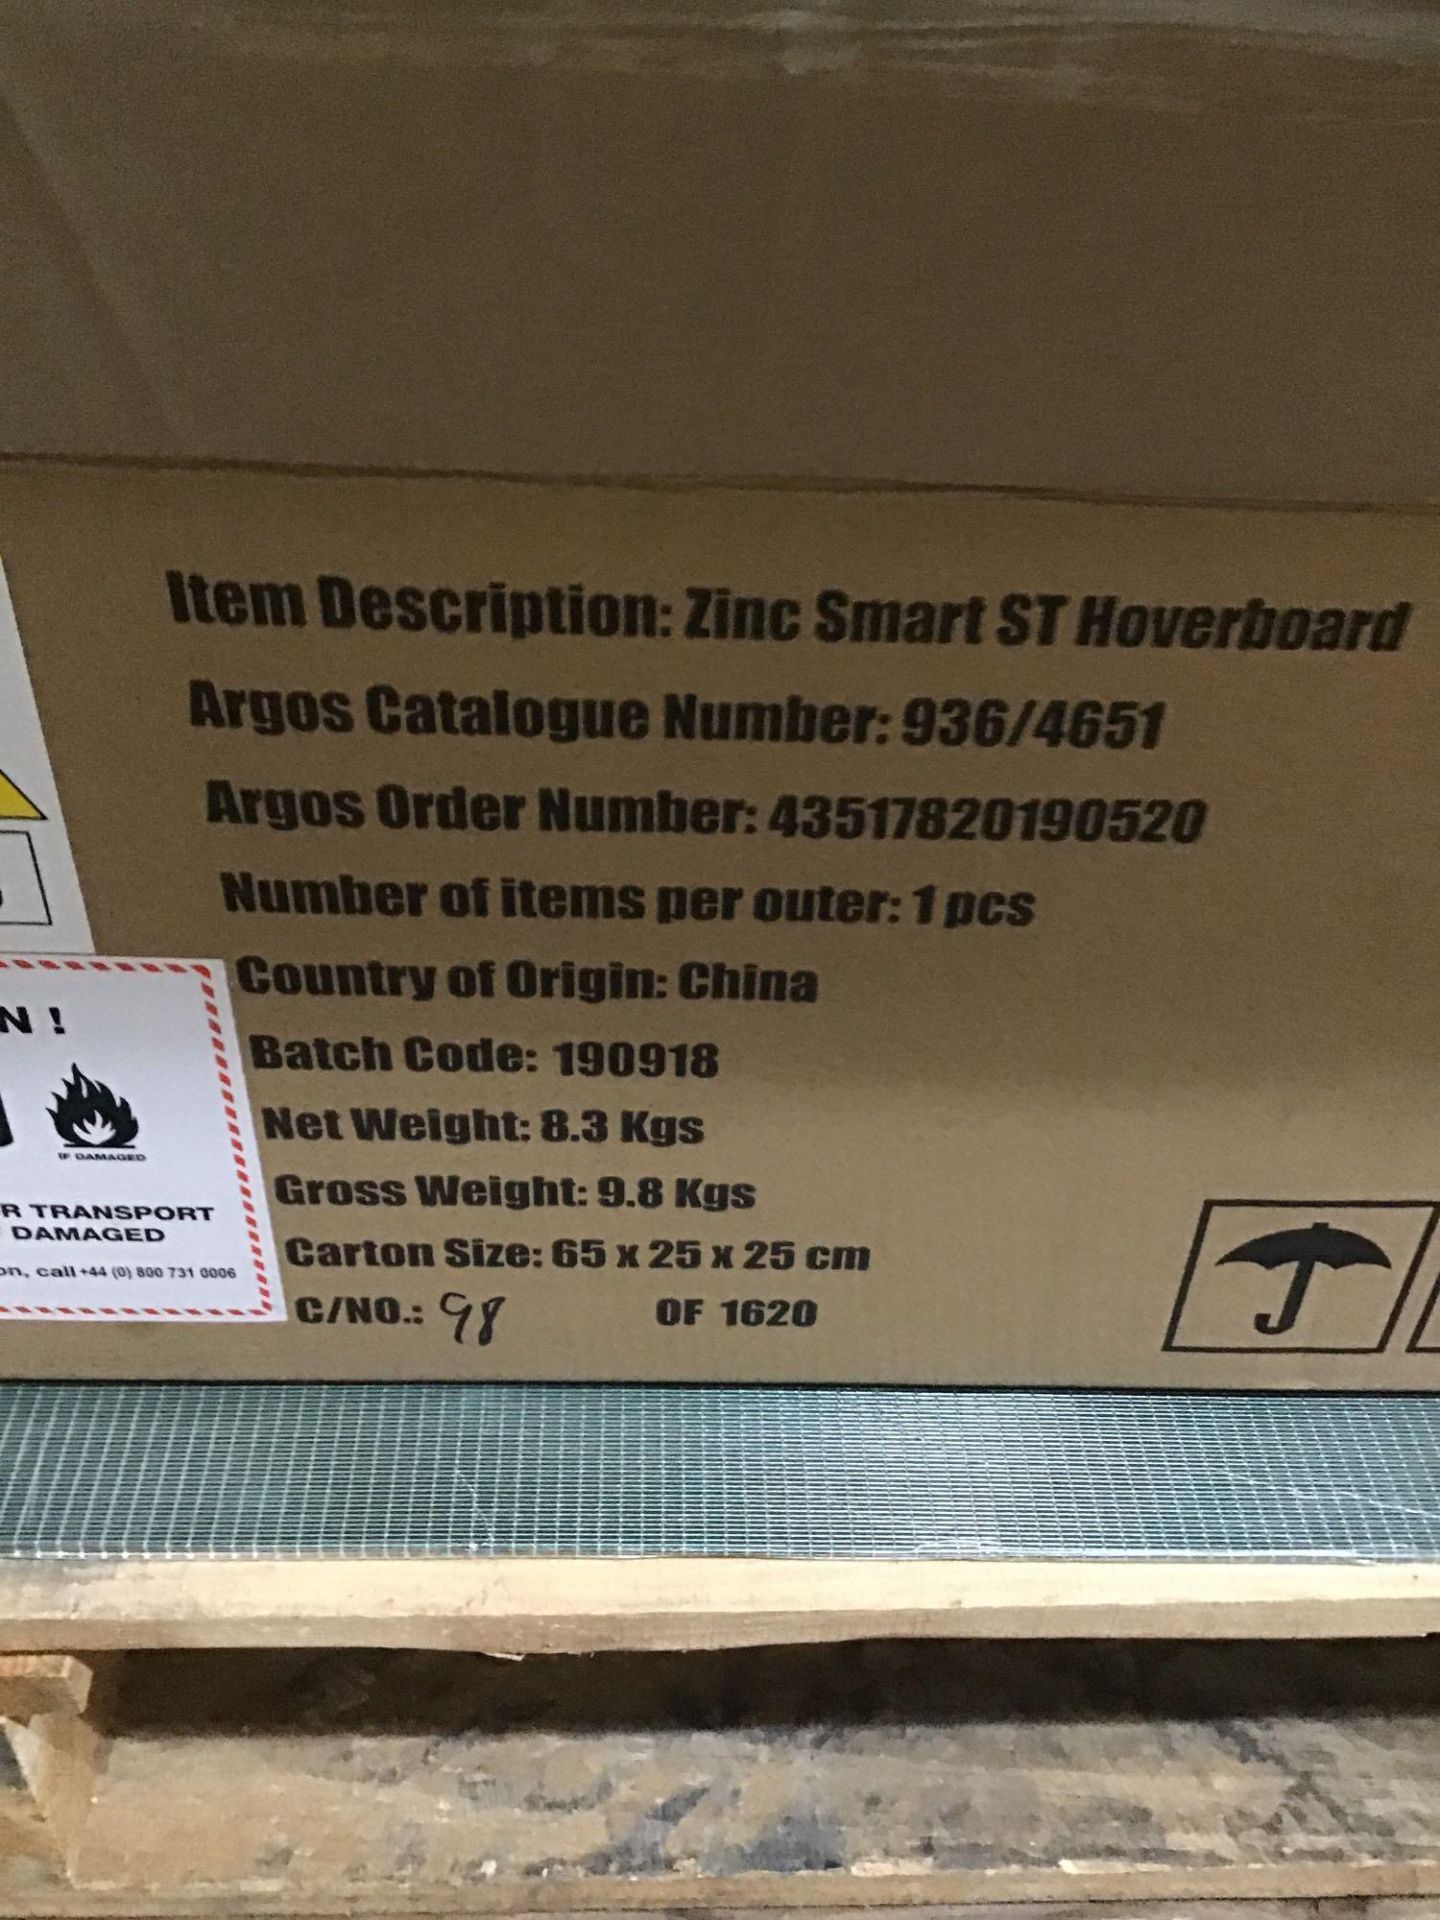 Zinc Smart ST Hoverboard 936/4651 - £149.99 RRP - Image 3 of 4